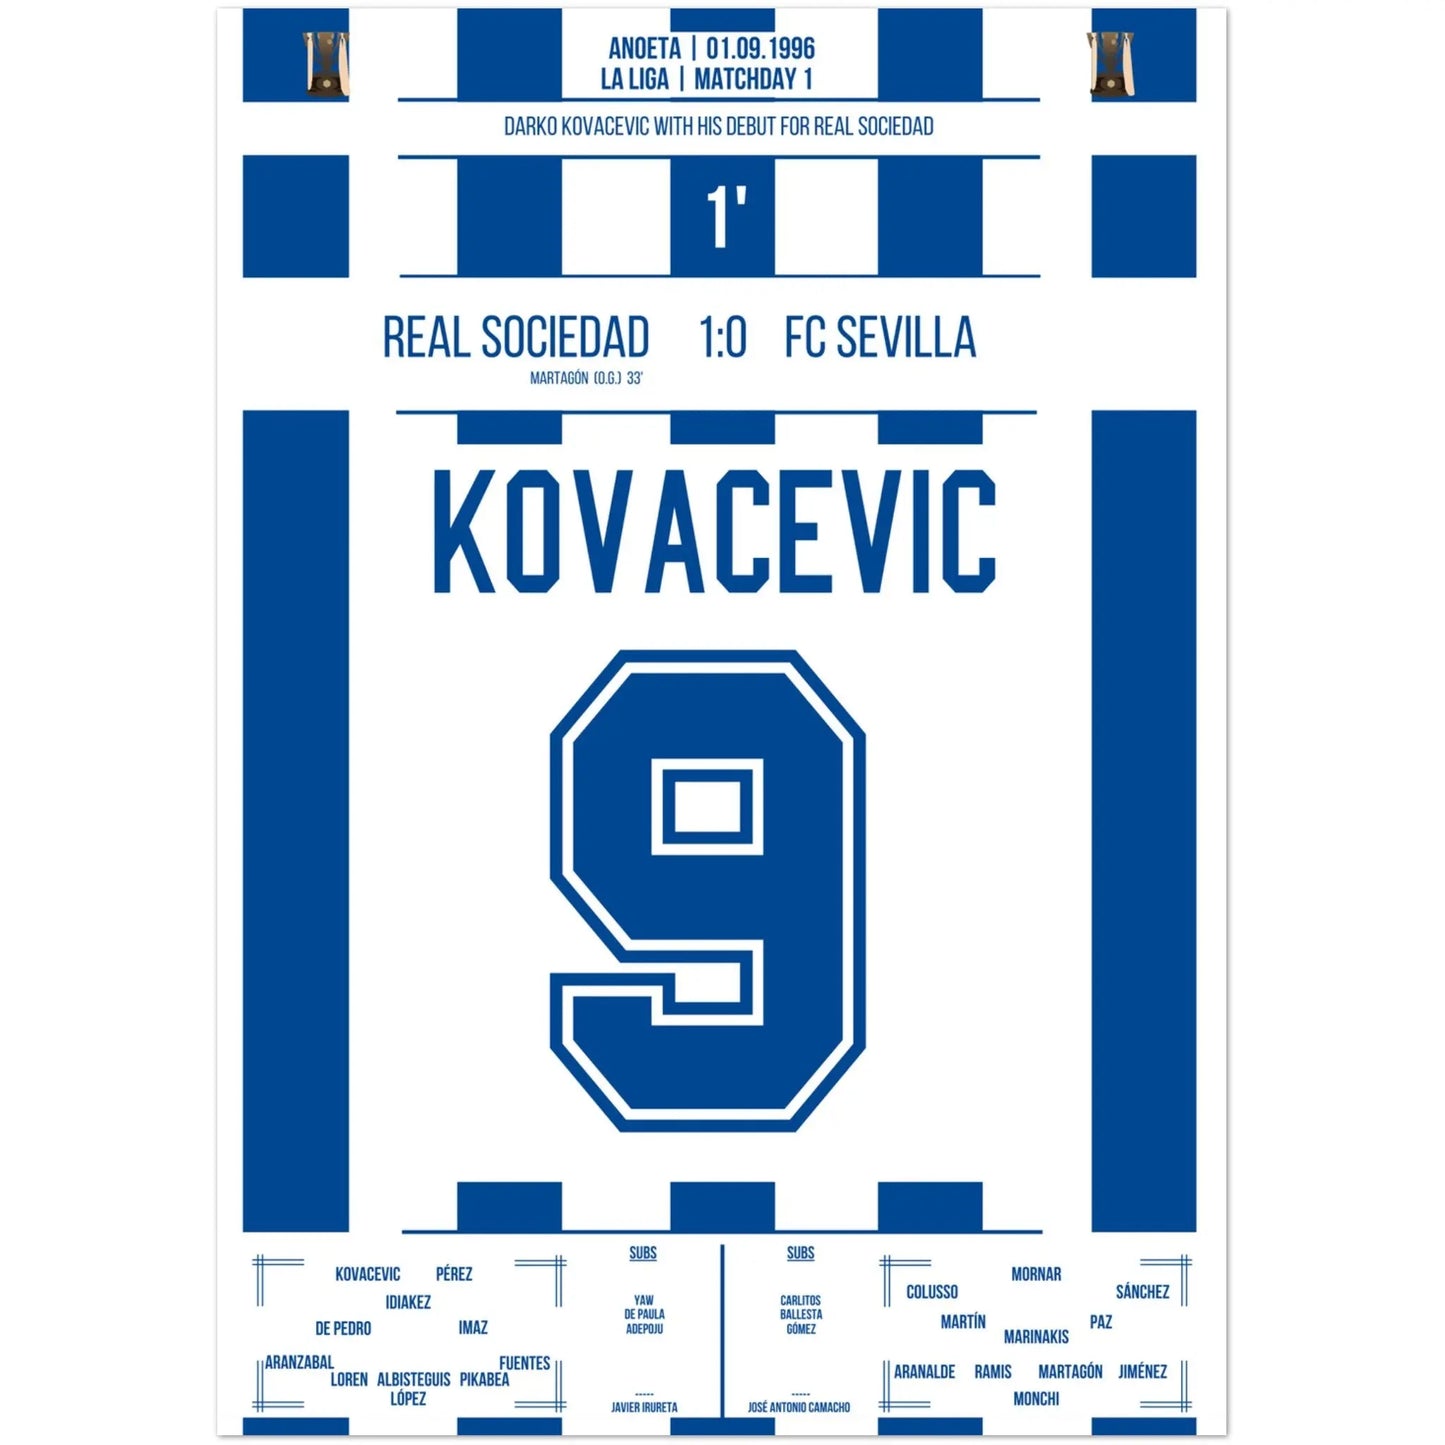 Darko Kovacevic made his debut for Real Sociedad in 1996